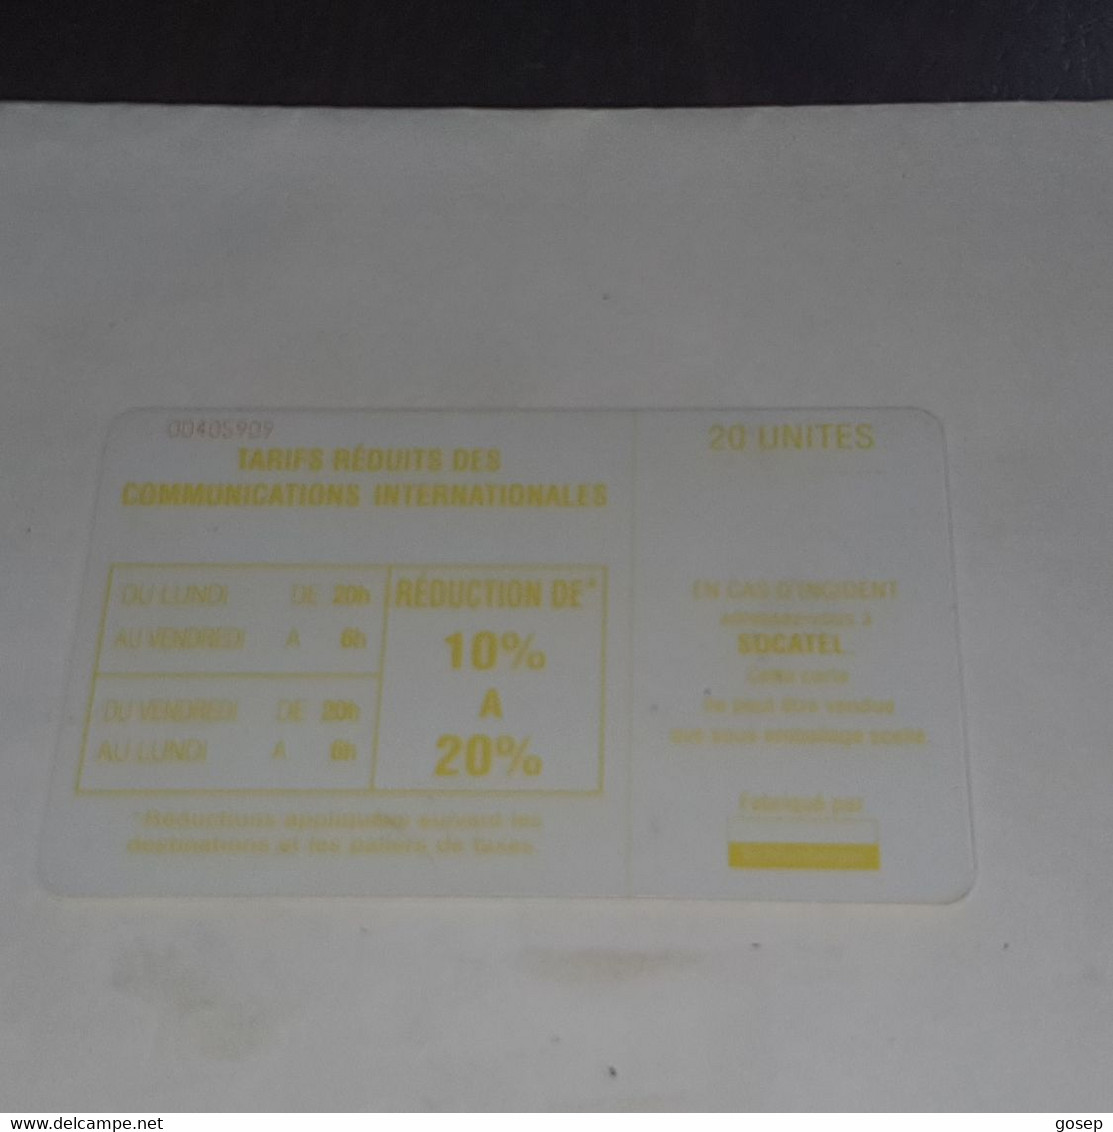 Ivory Coast-(CIF-SOC-0016/1)-socatel-yellow-(21)-(20units)-(00405909)-used Card+1card Prepiad Free - Côte D'Ivoire